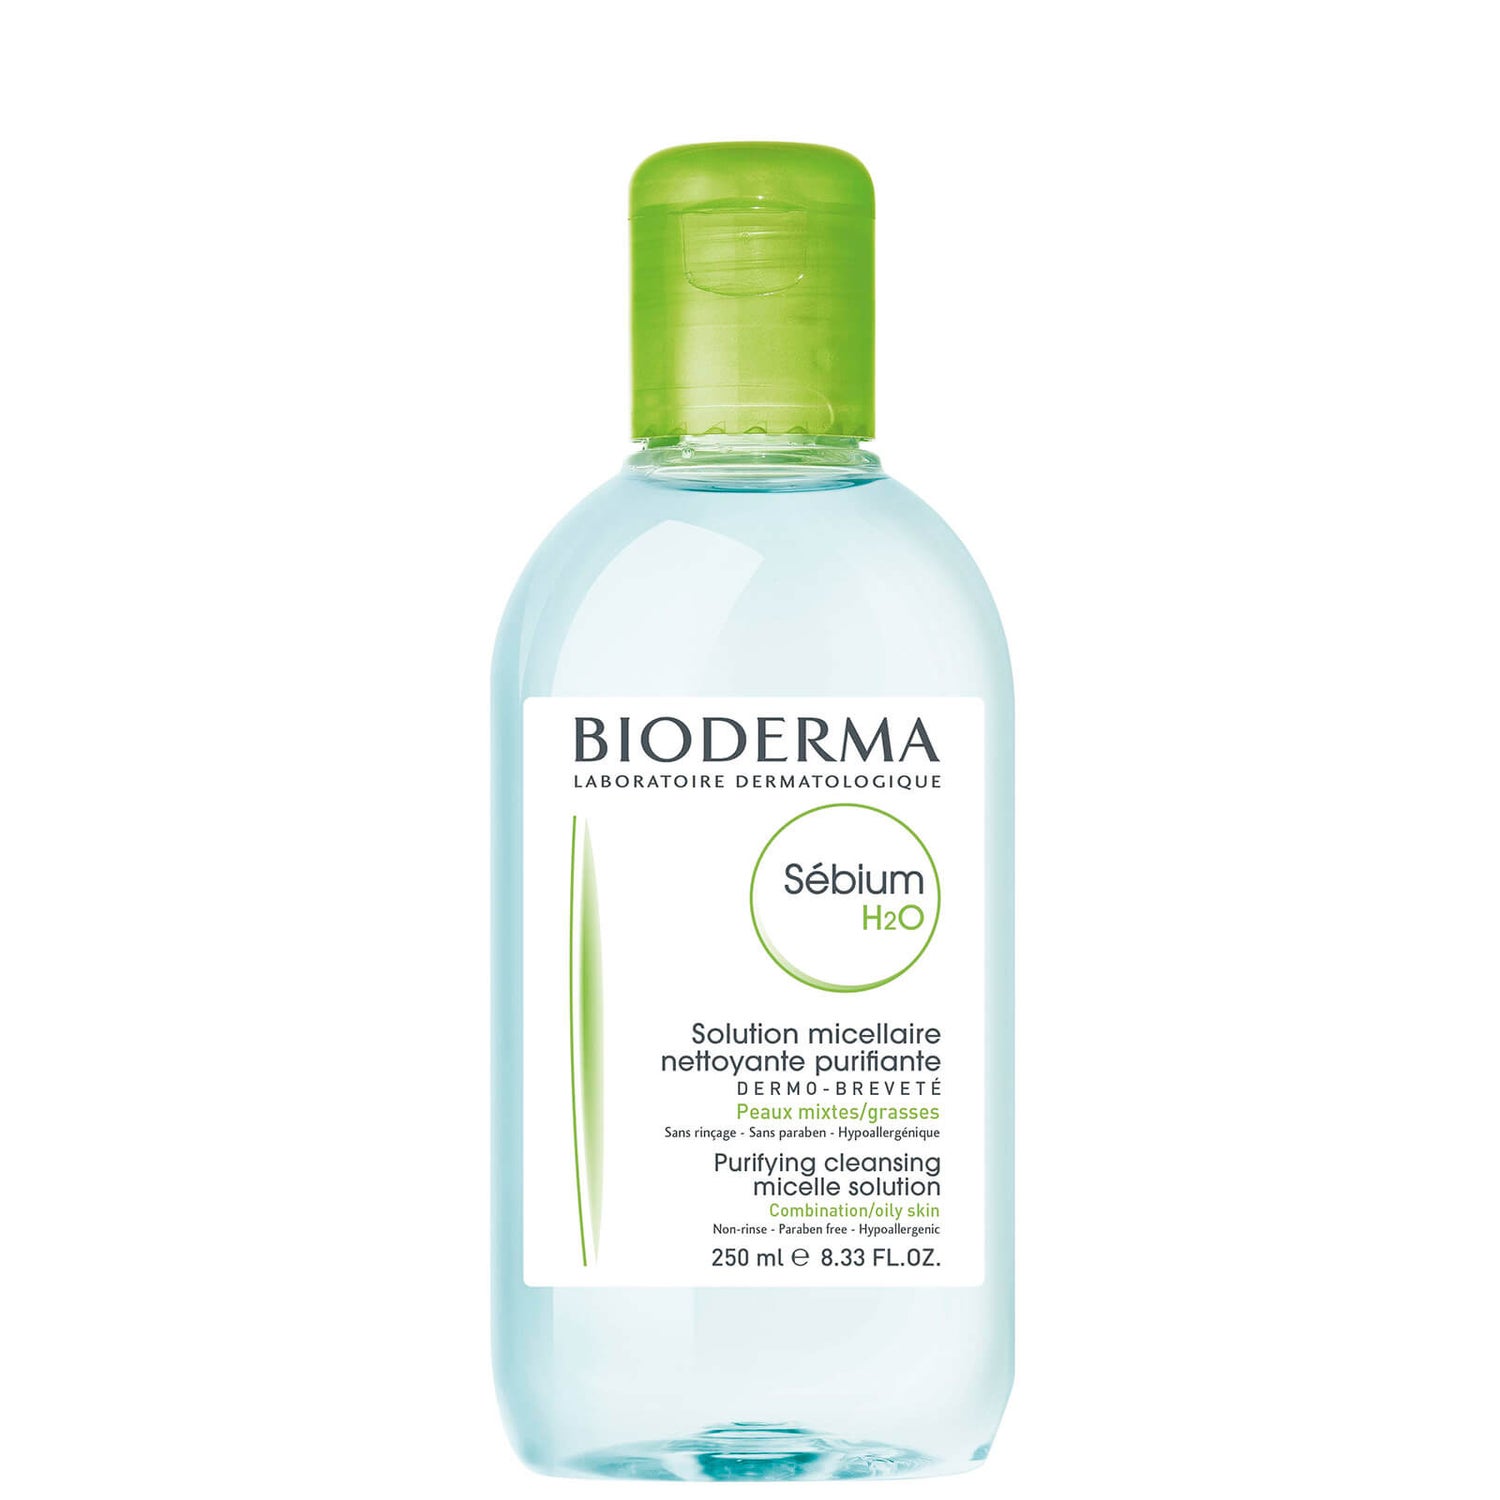 Bioderma Sebium H2O Agua micelar limpiadora purificante Desmaquillante Piel mixta a grasa